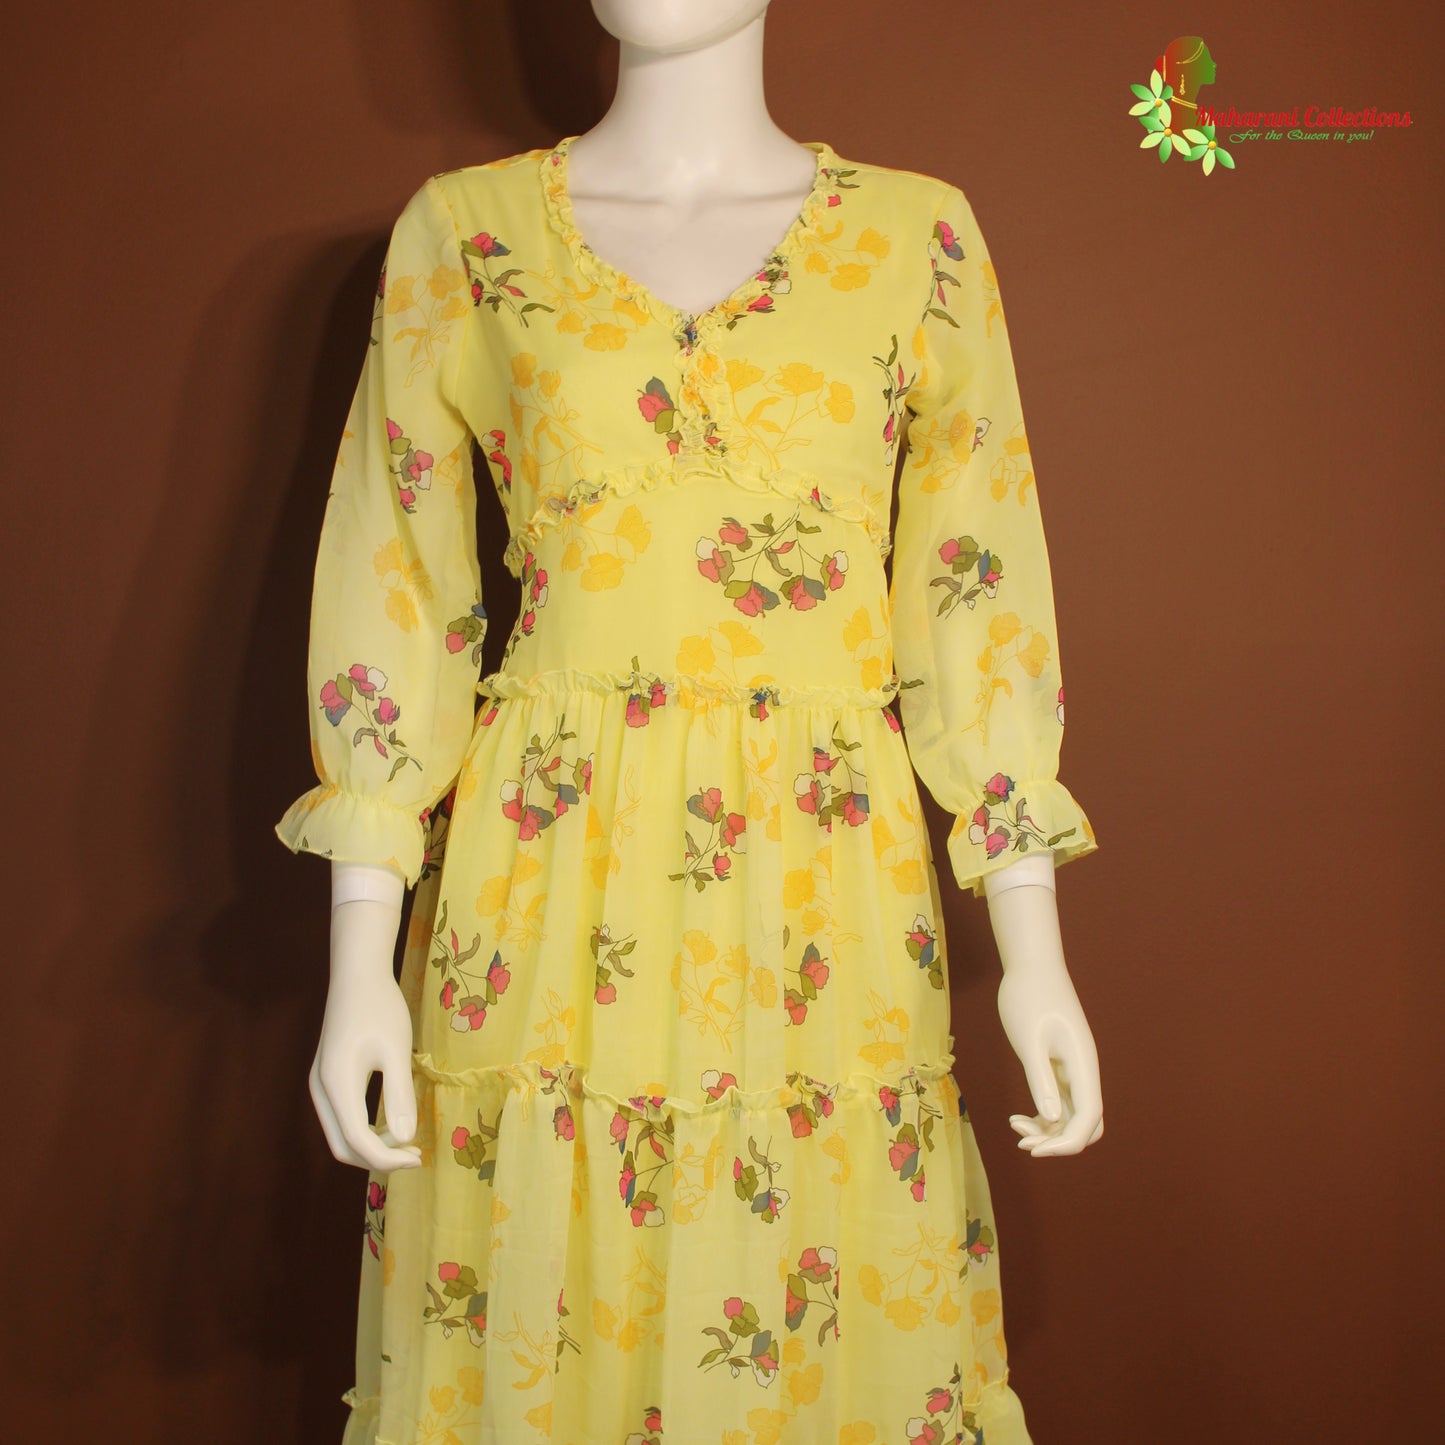 Maharani's Short Dress - Georgette - Lemon Yellow (XS)